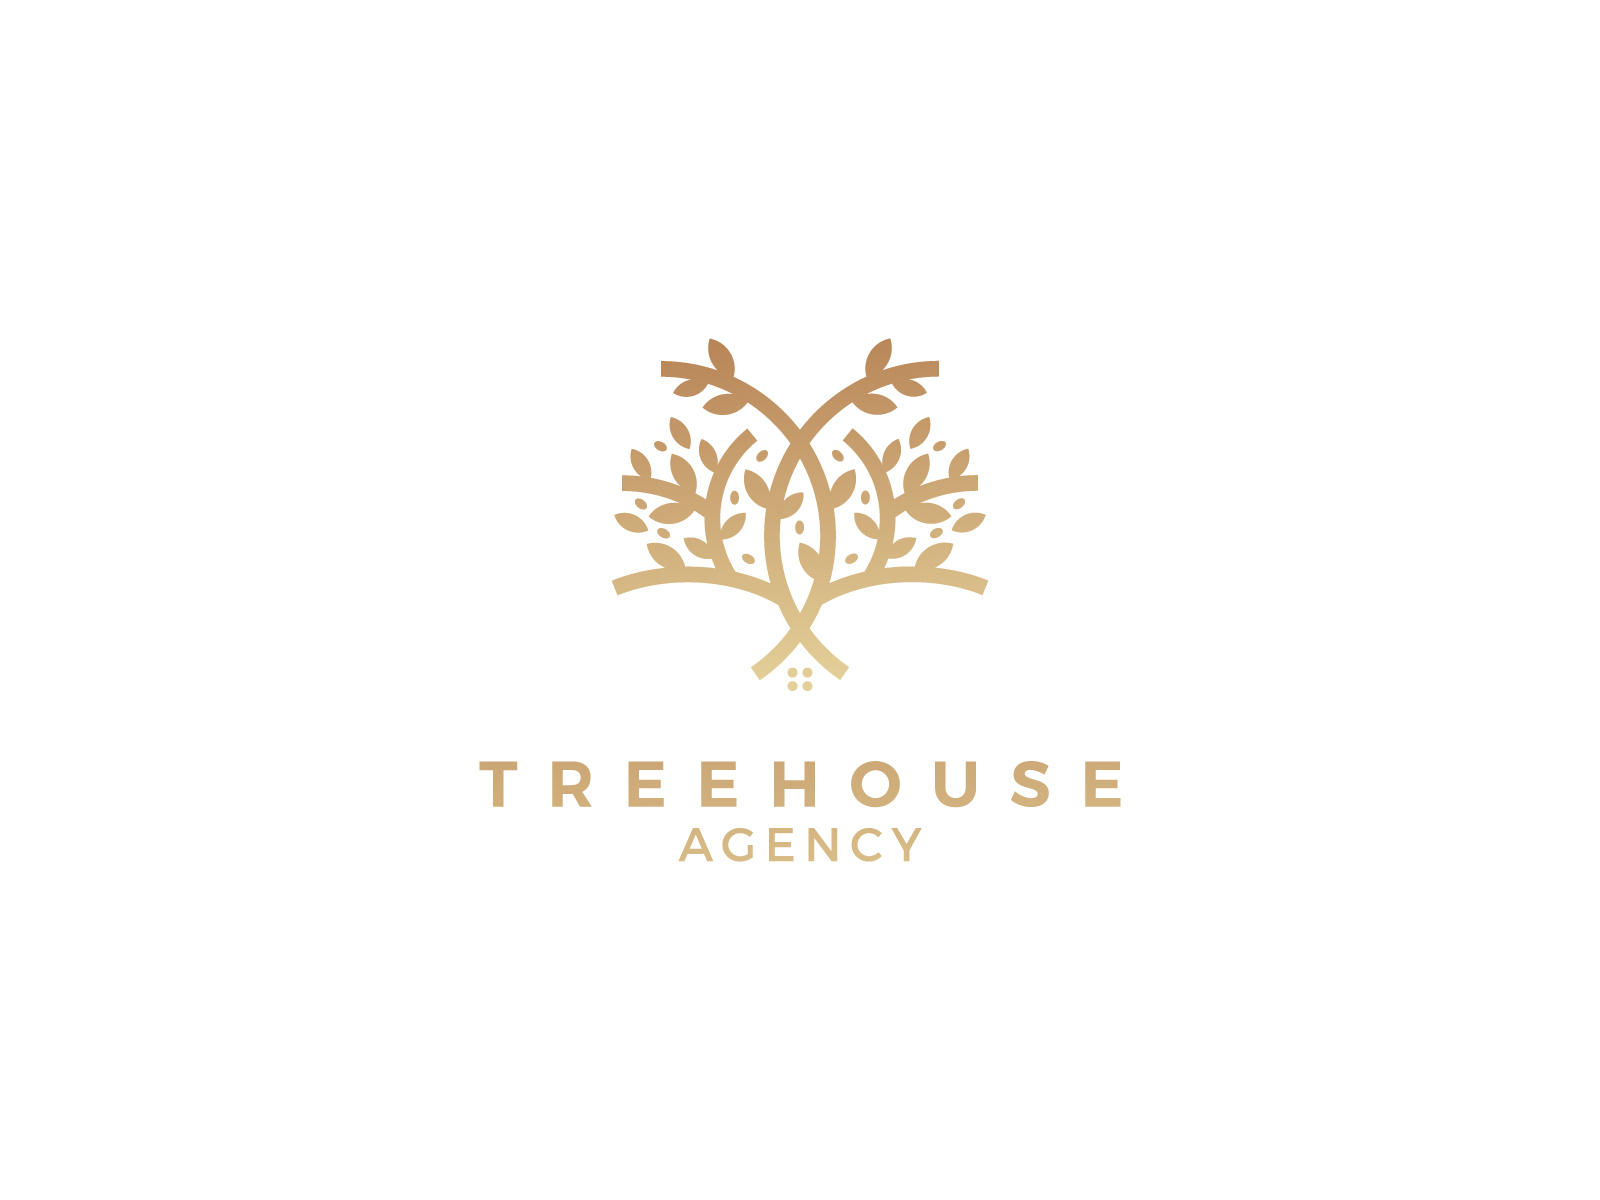 Treehouse logo by Fauzimqn on Dribbble